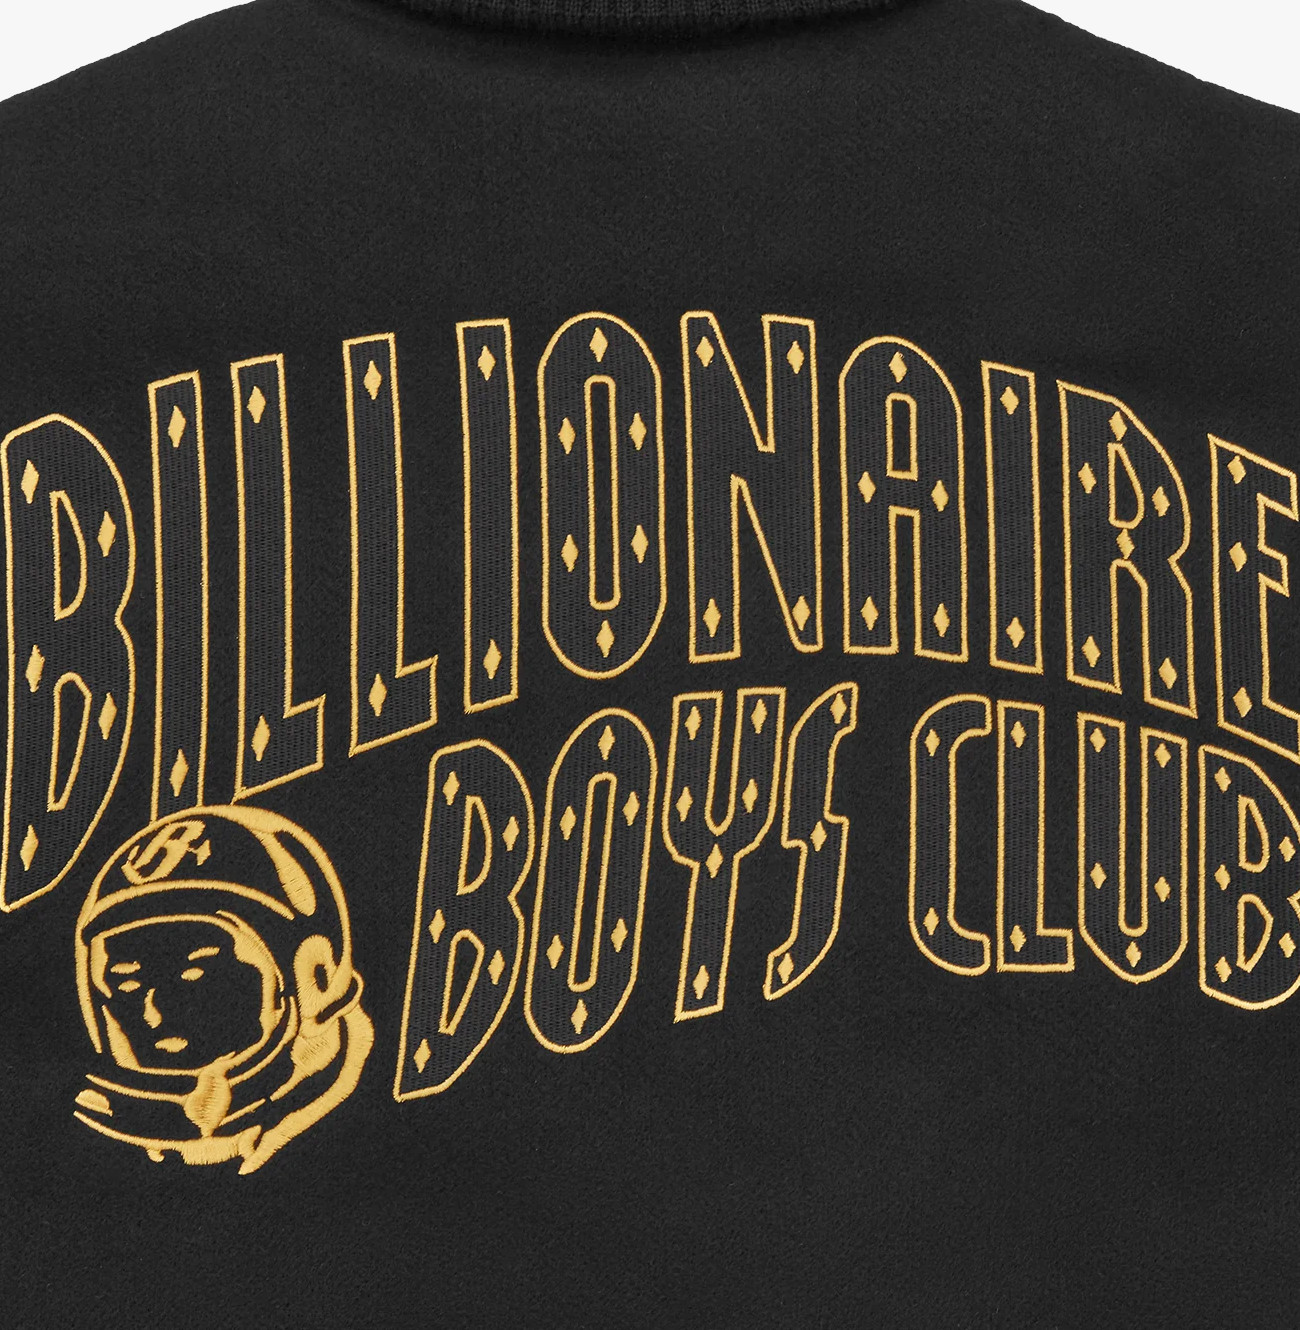 Billionaire Boys Club Leather Sleeve Varsity Jacket Black/Gold